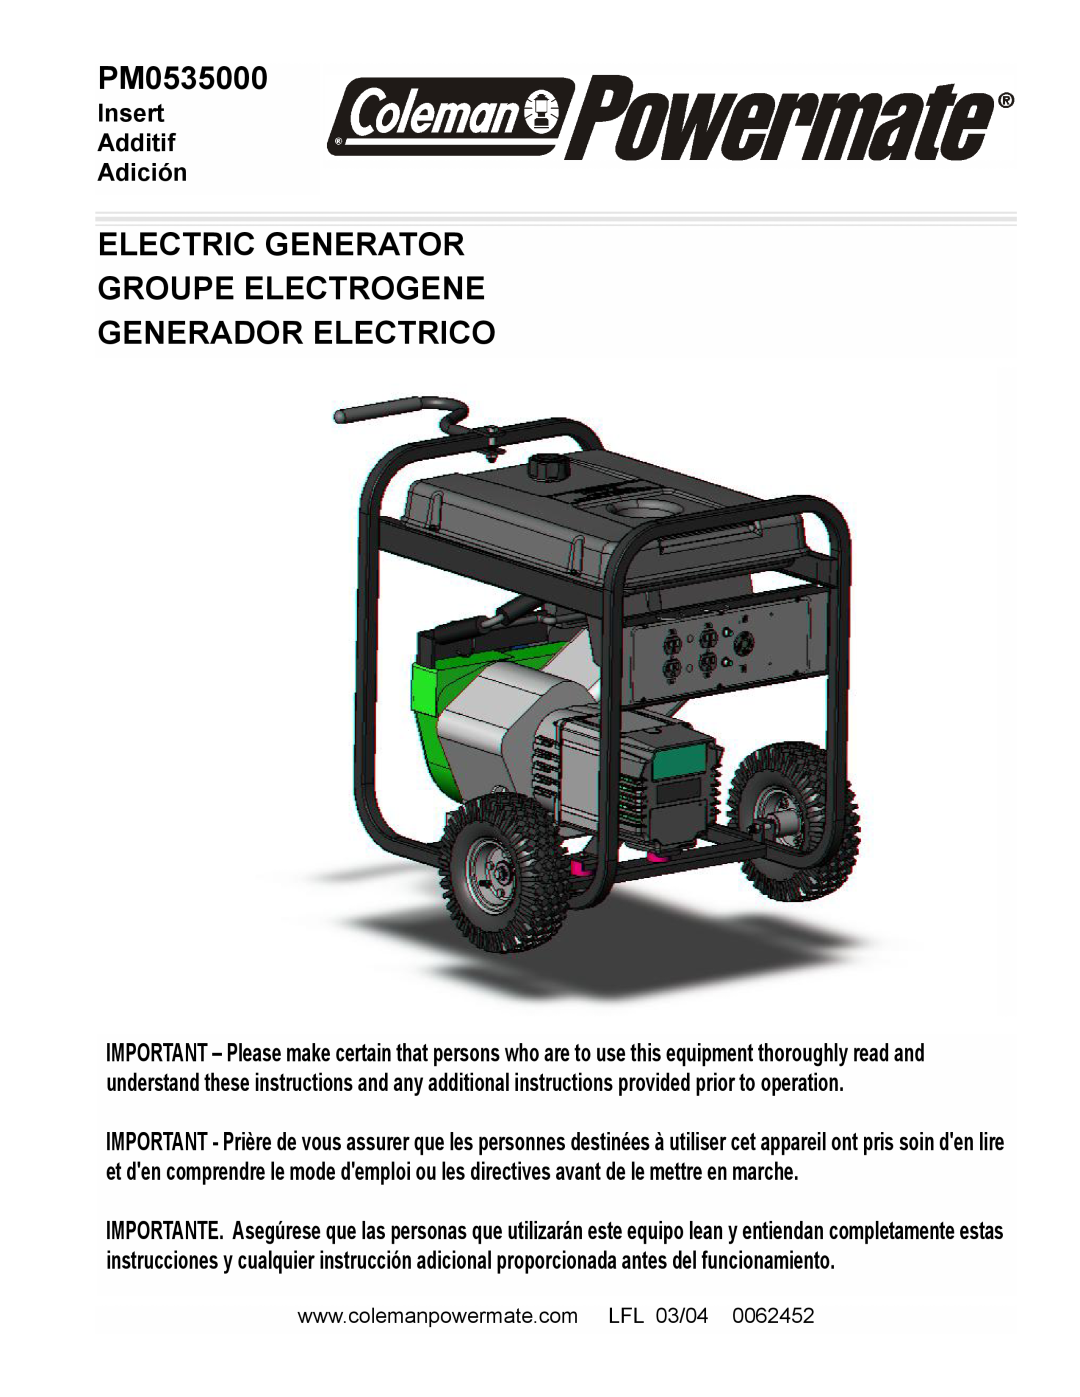 Powermate PM0535000 manual Electric Generator Groupe Electrogene, Generador Electrico, Insert Additif Adición 